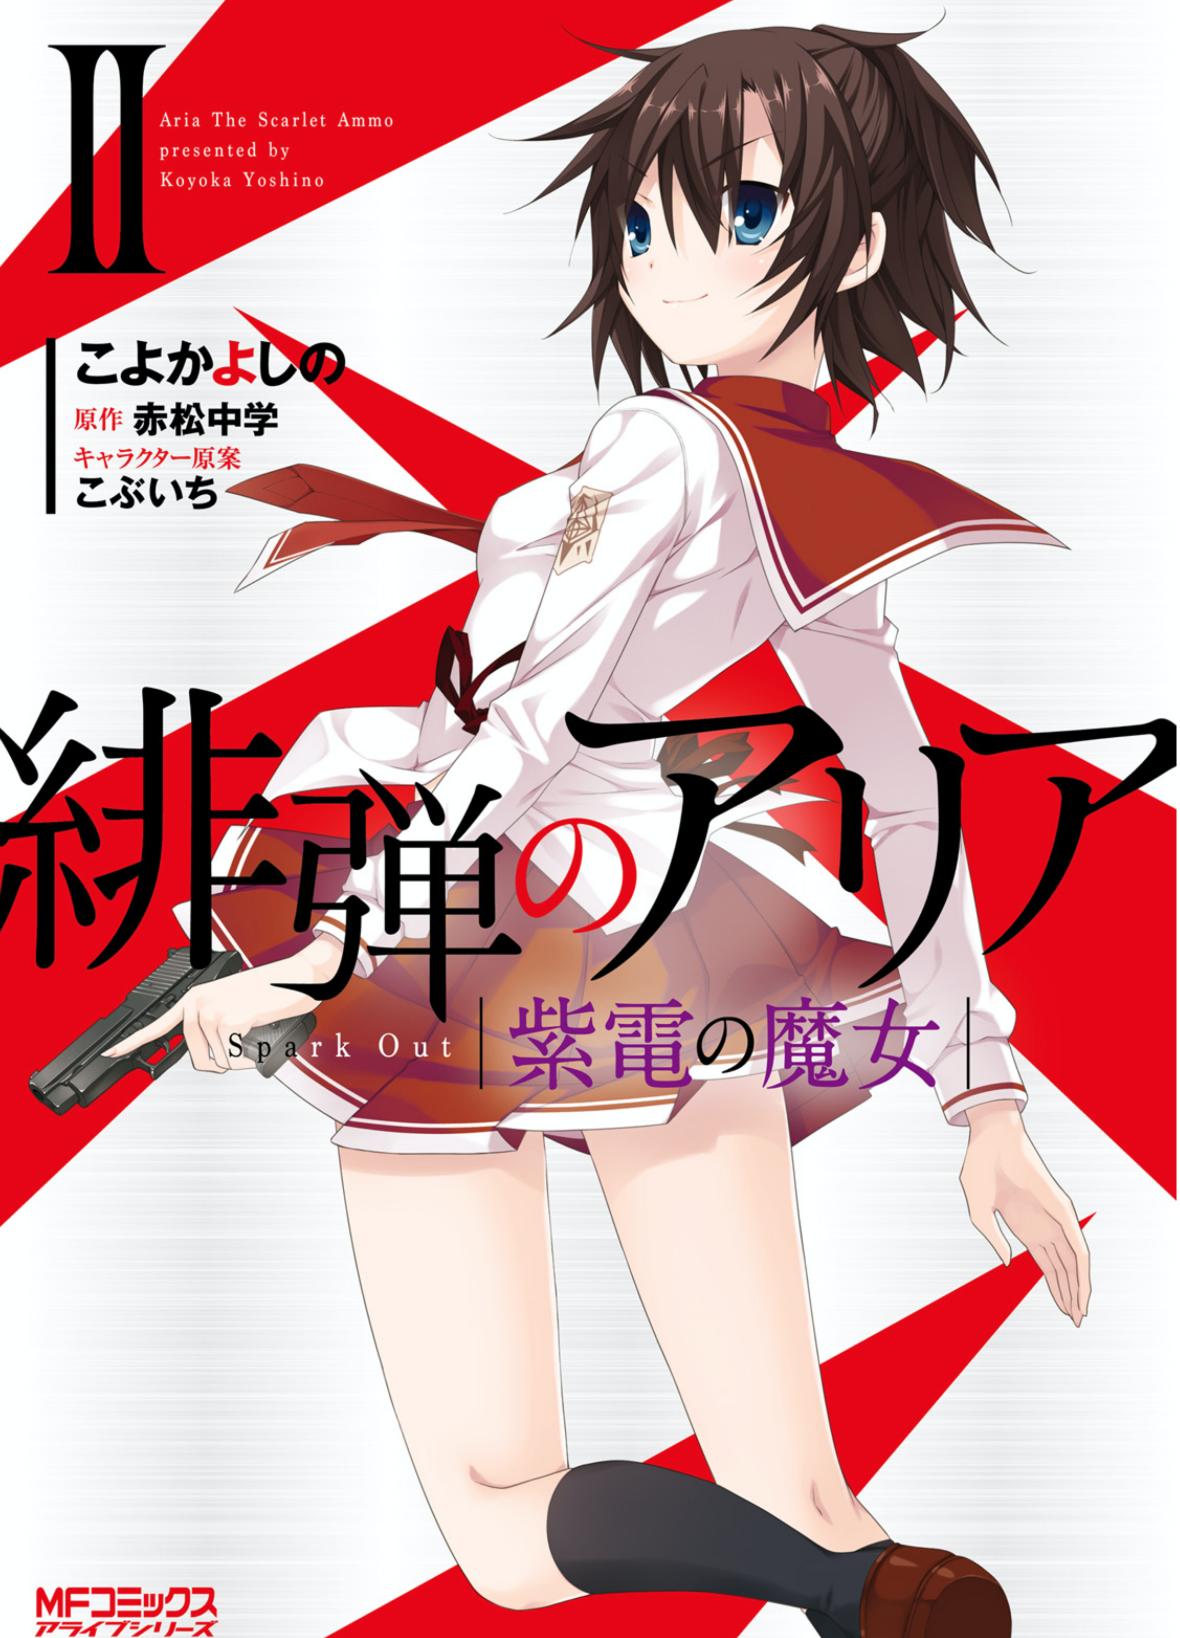 18 Anime Like Aria the Scarlet Ammo